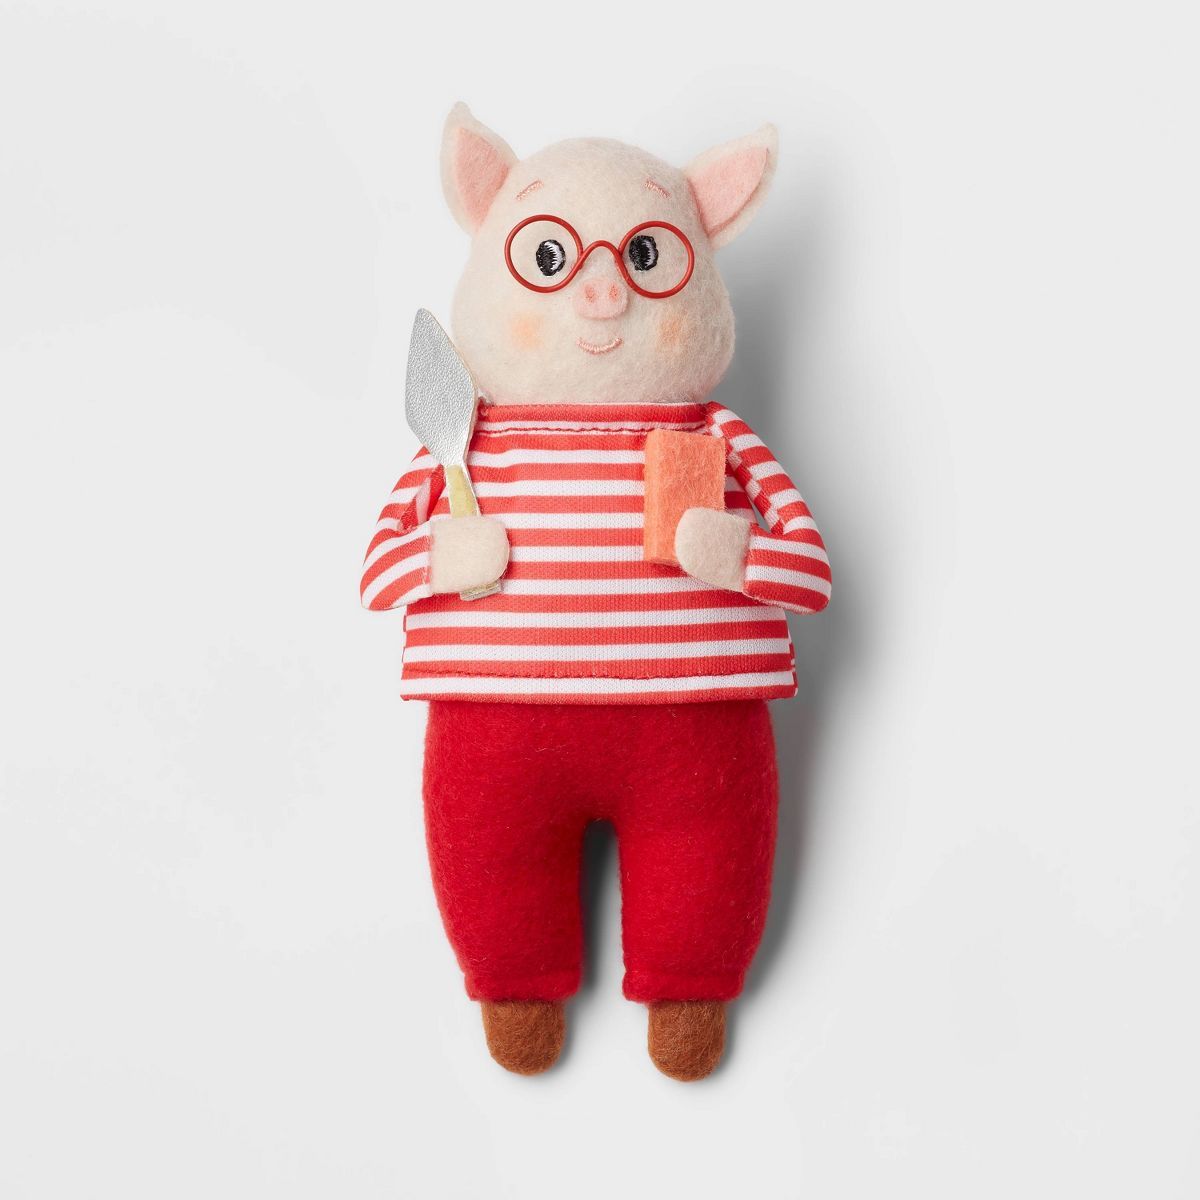 The Three Little Pigs Pig Holding Brick and Trowel Fabric Christmas Tree Ornament - Wondershop™ | Target